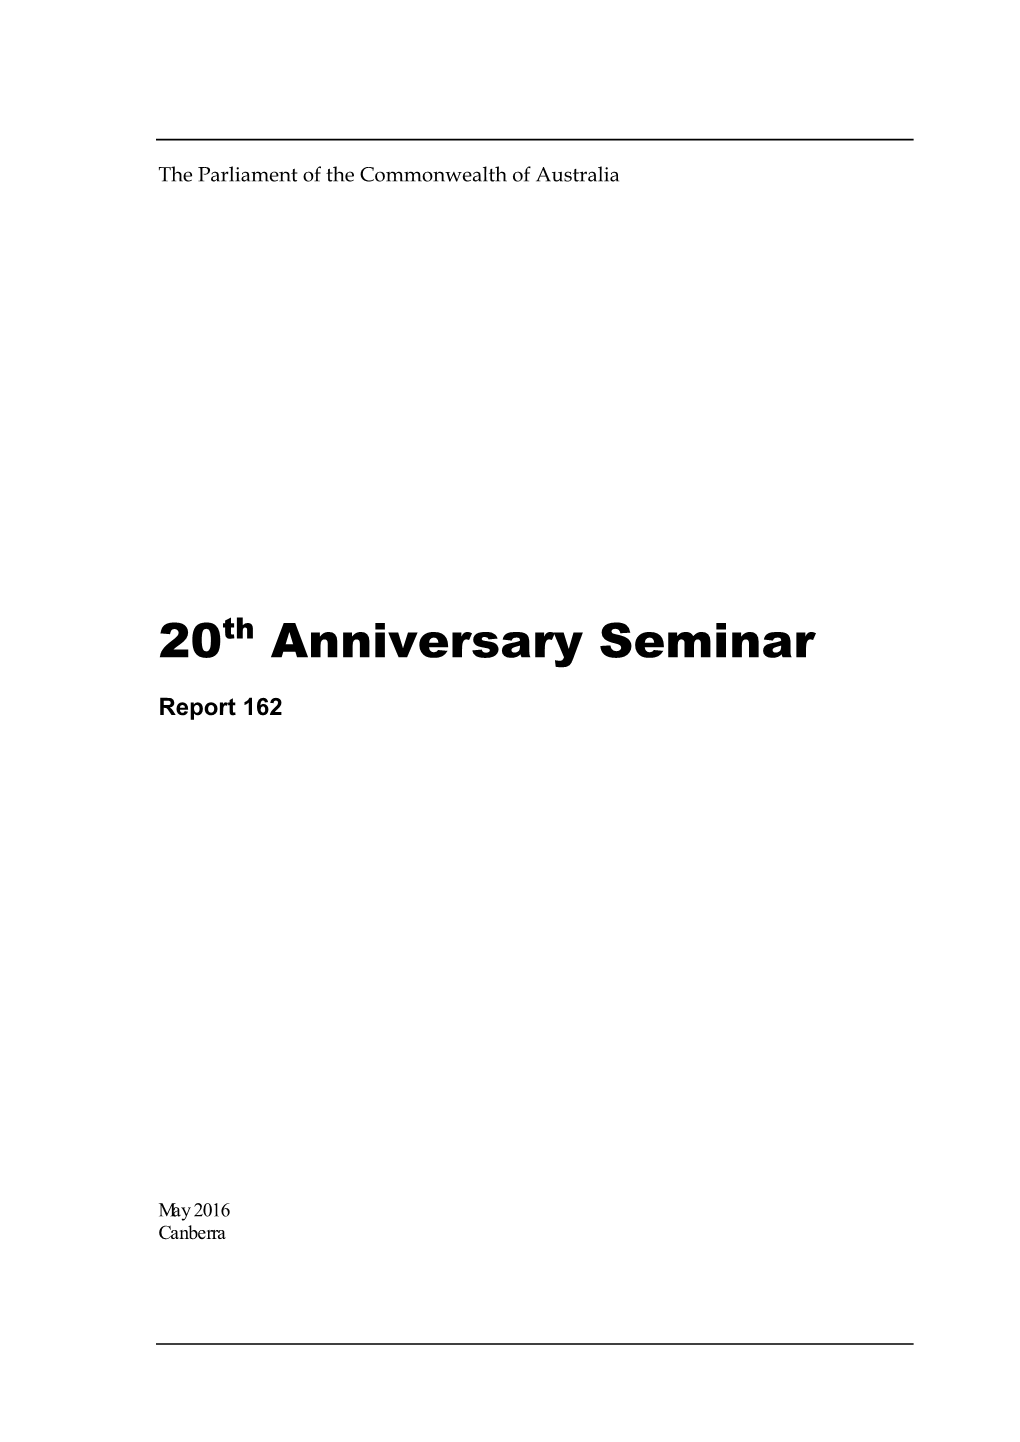 Report 162: 20Th Anniversary Seminar